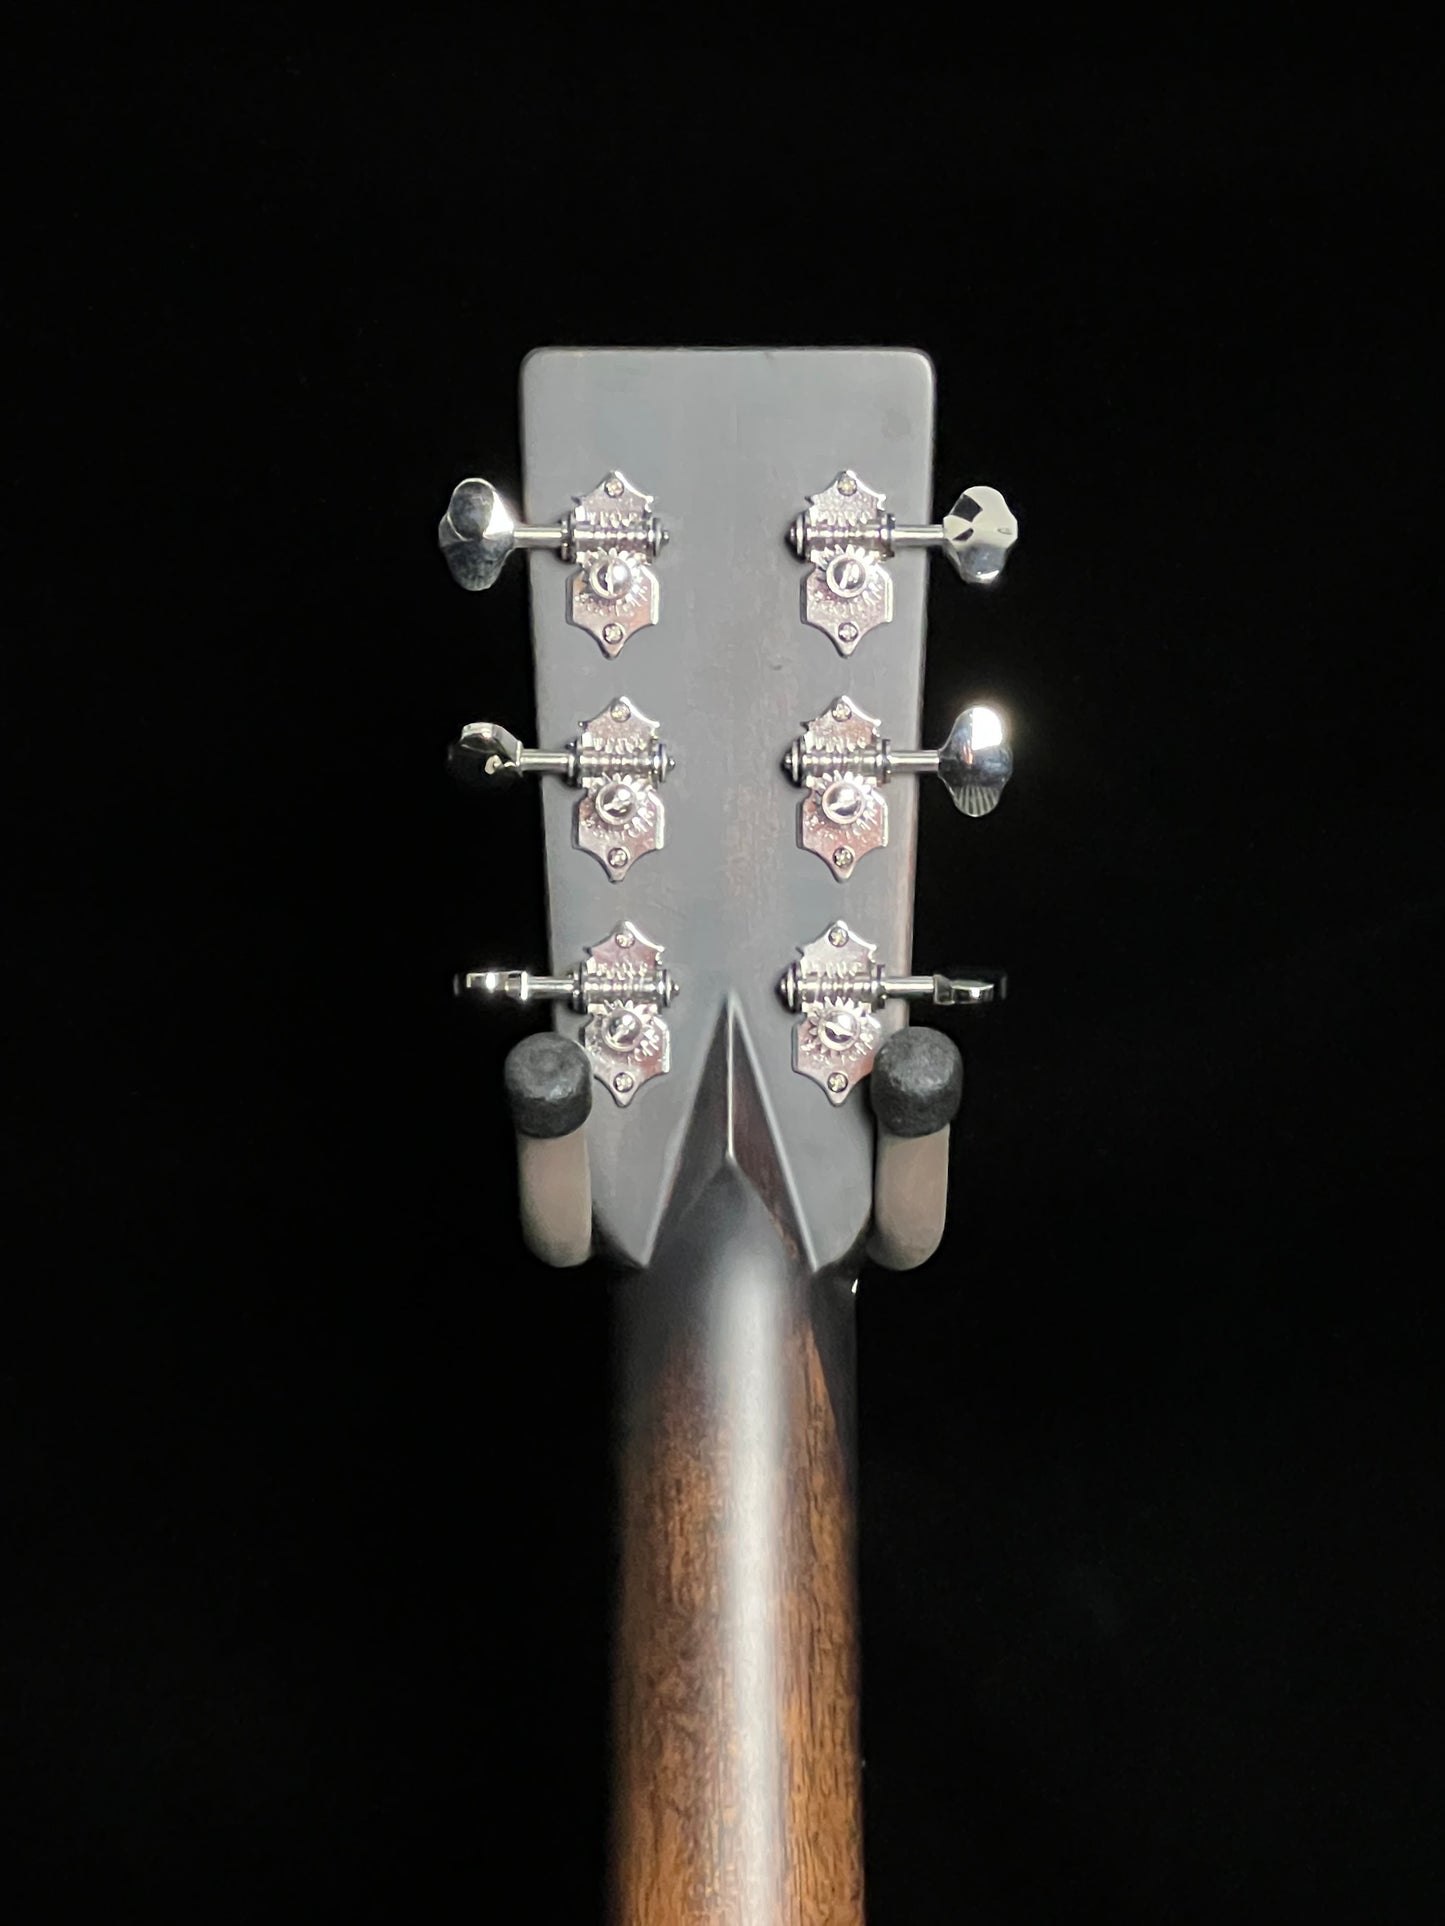 Eastman E20 OM-TC Adirondack Spruce/Solid Rosewood Acoustic Guitar - New